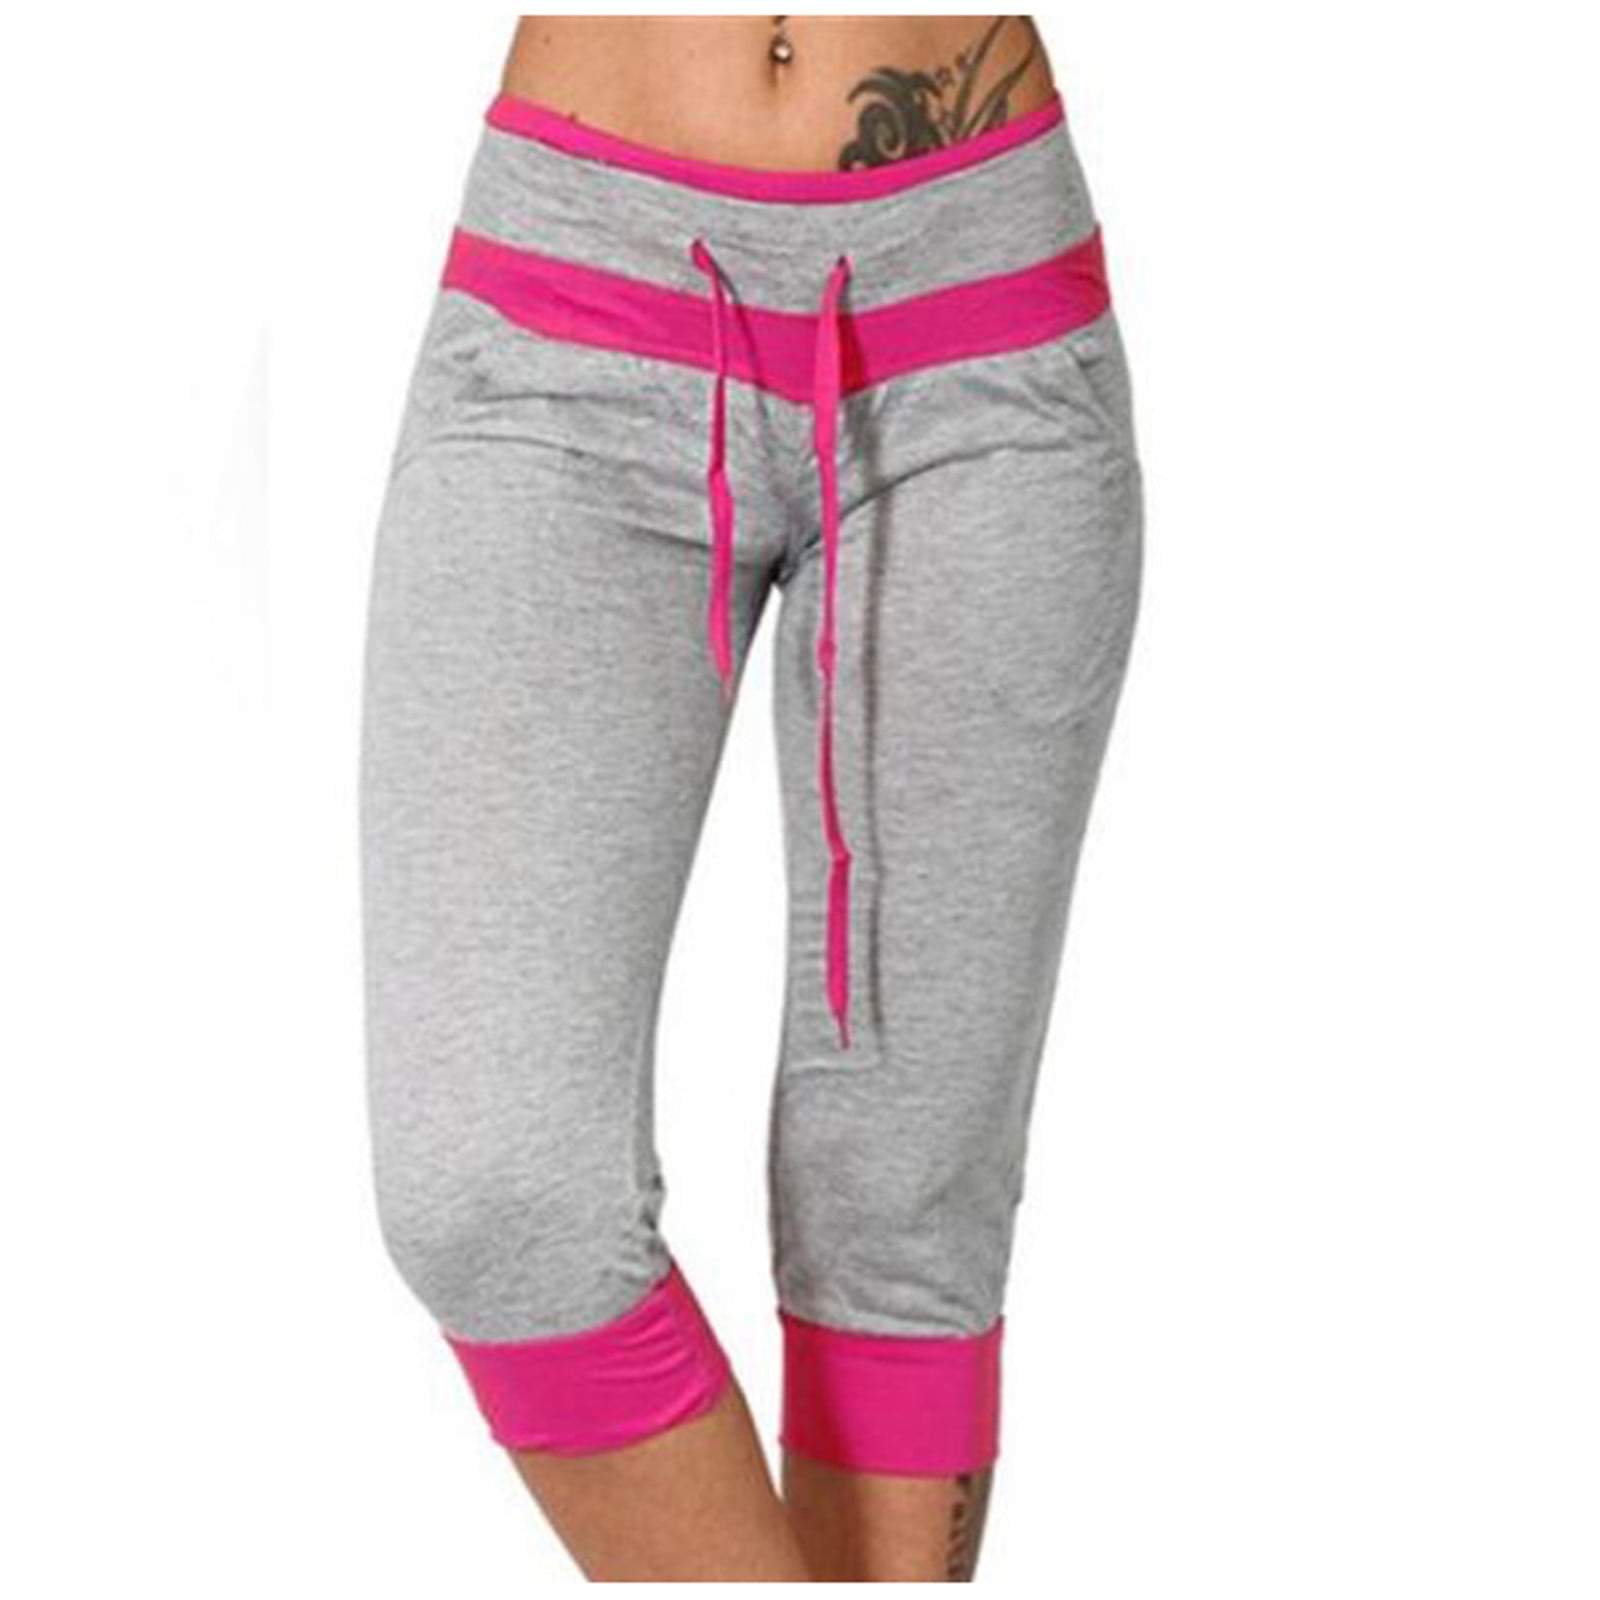 Plus Size Capri Pants for Women Workout Joggers Capris Slacks Stretch  Athletic Yoga Pants High Waisted Drawstring (Small, Gray)